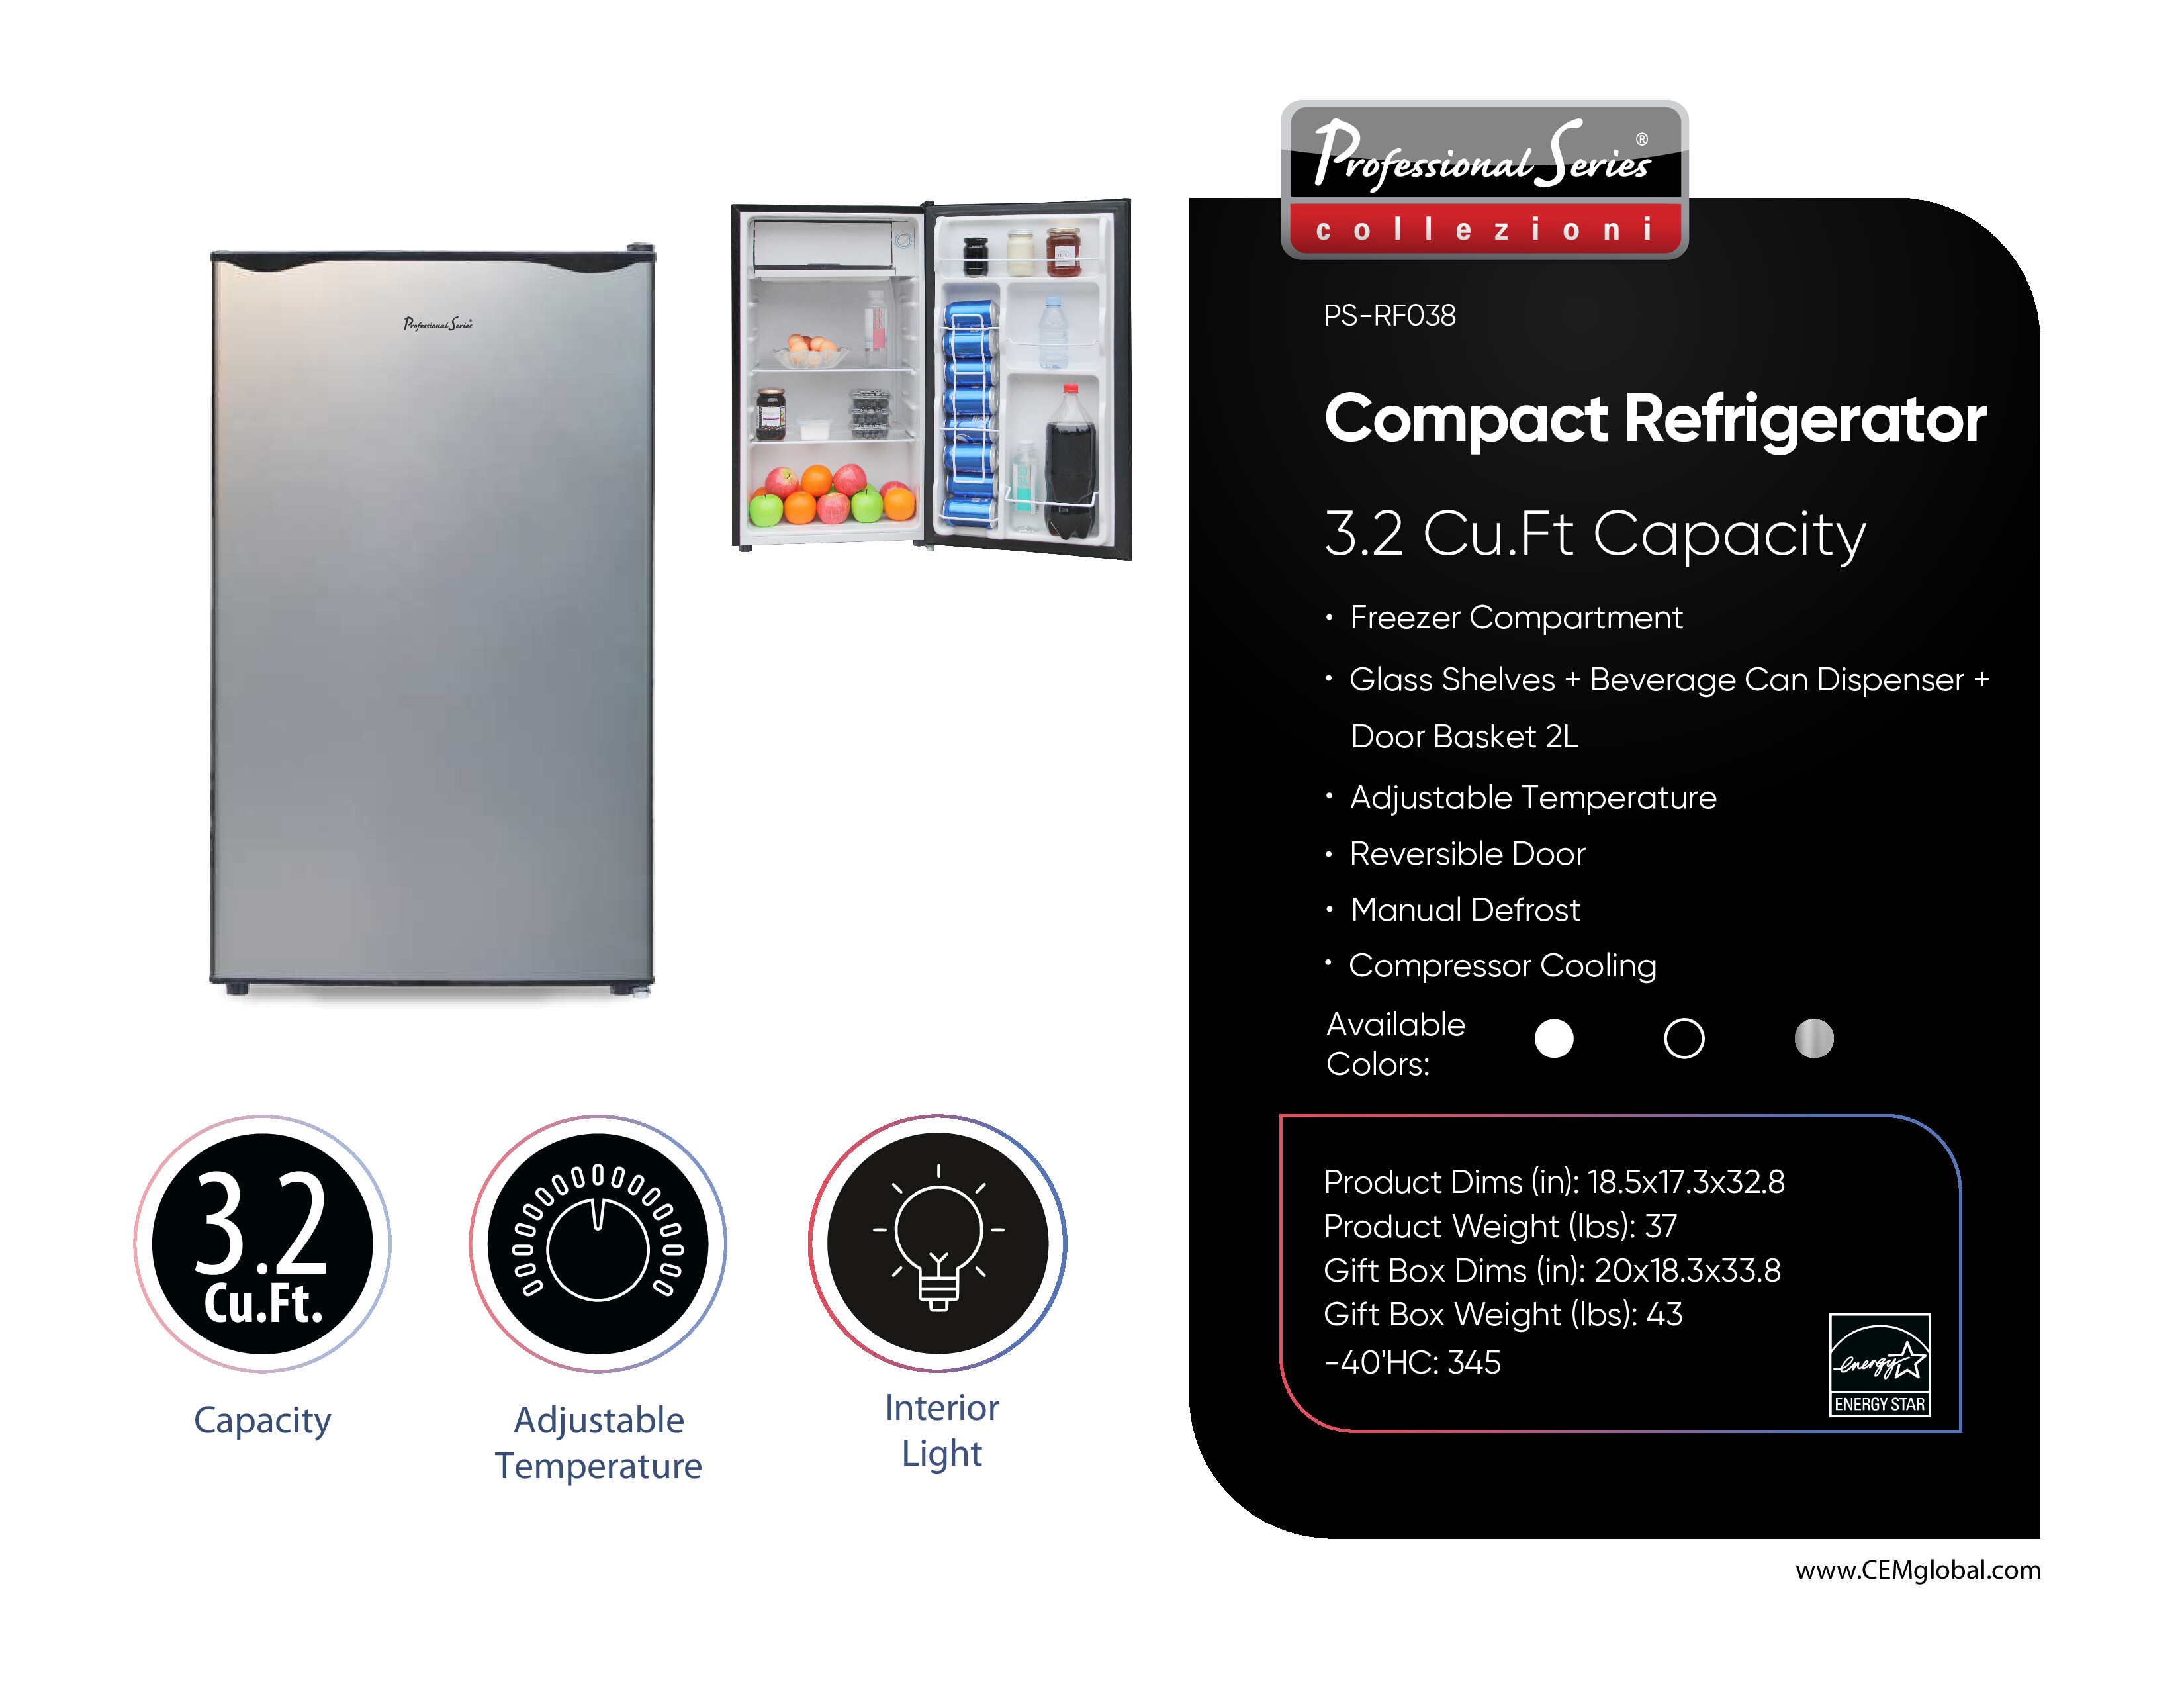 Compact Refrigerator 3.2 Cu.Ft.